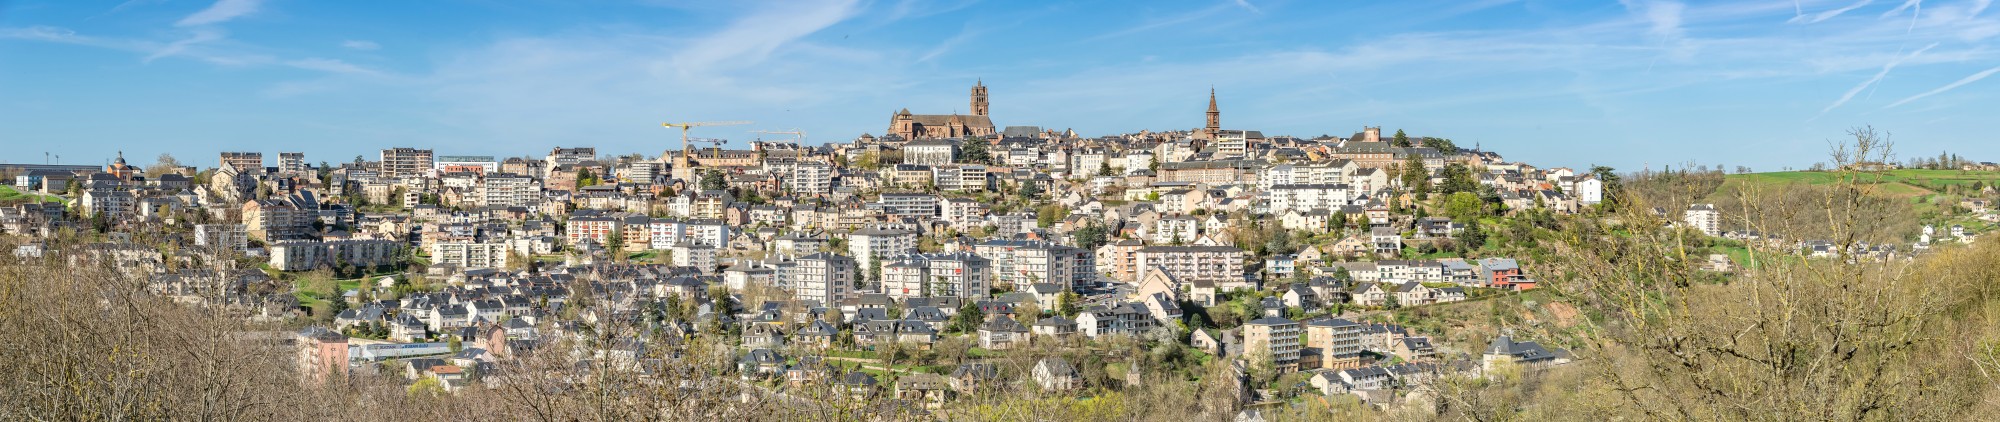 Panoramic view of Rodez 01